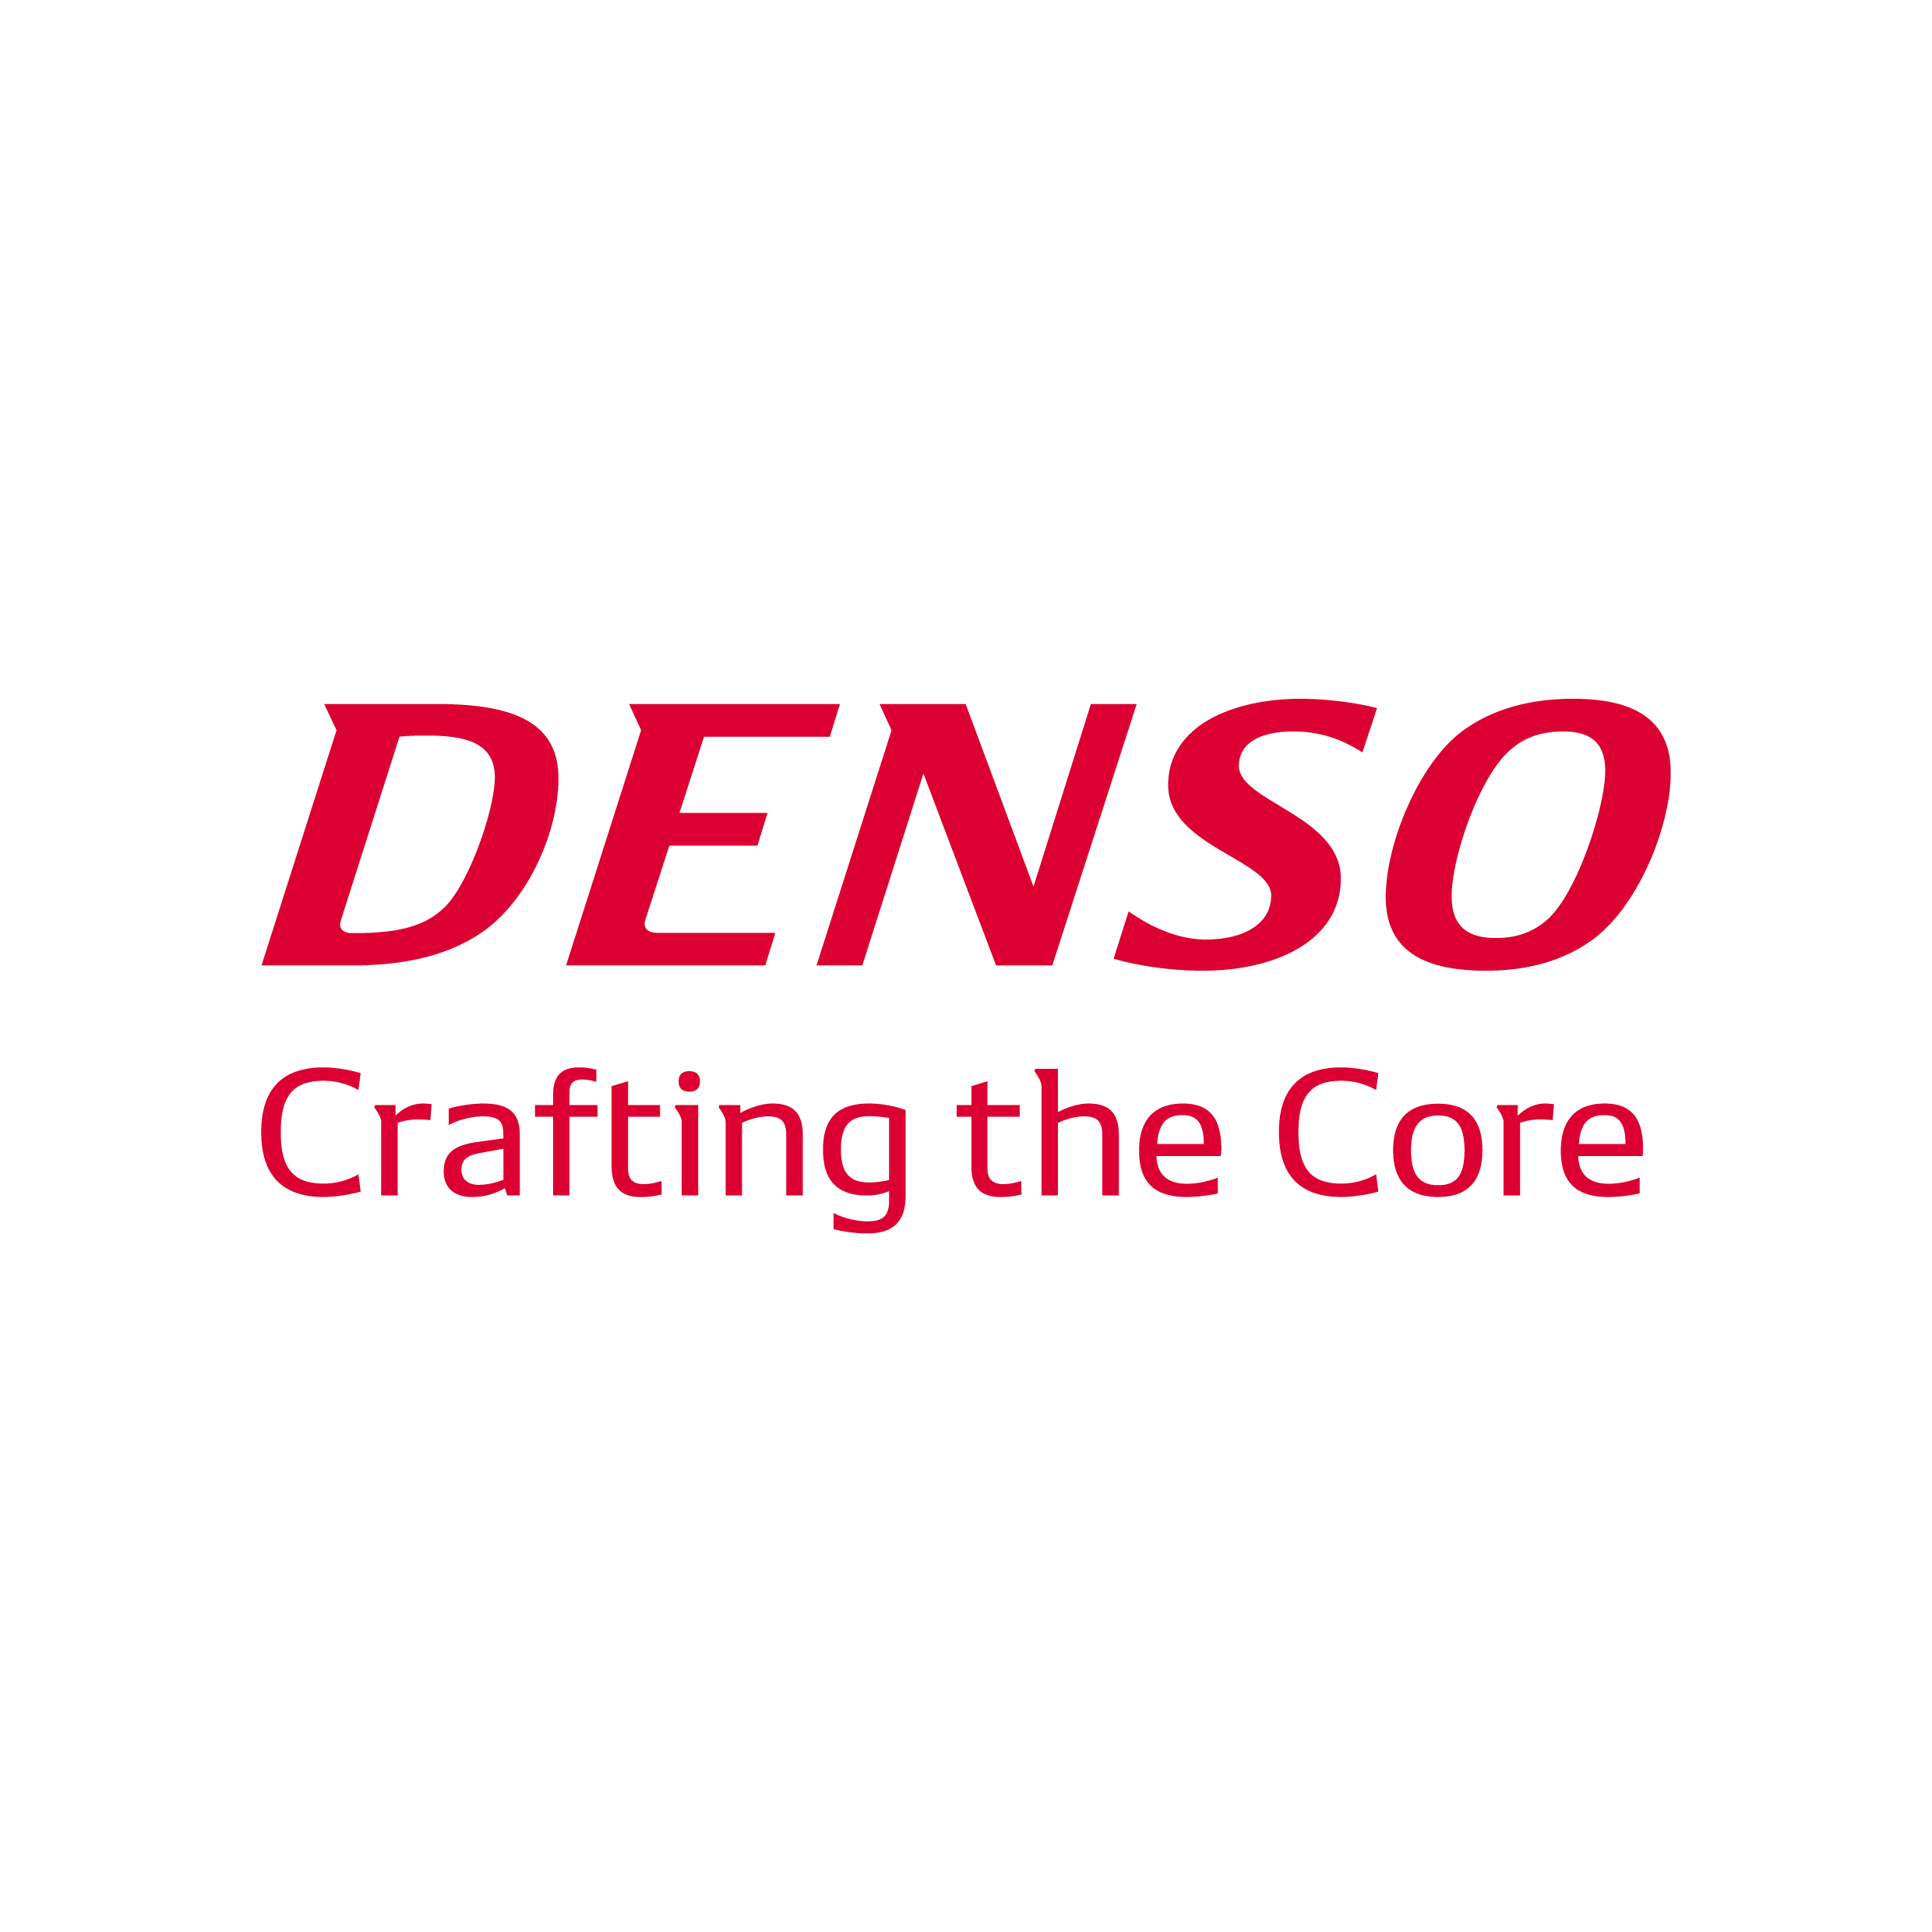 Denso_Logo_Tagline-small_Red_RGB